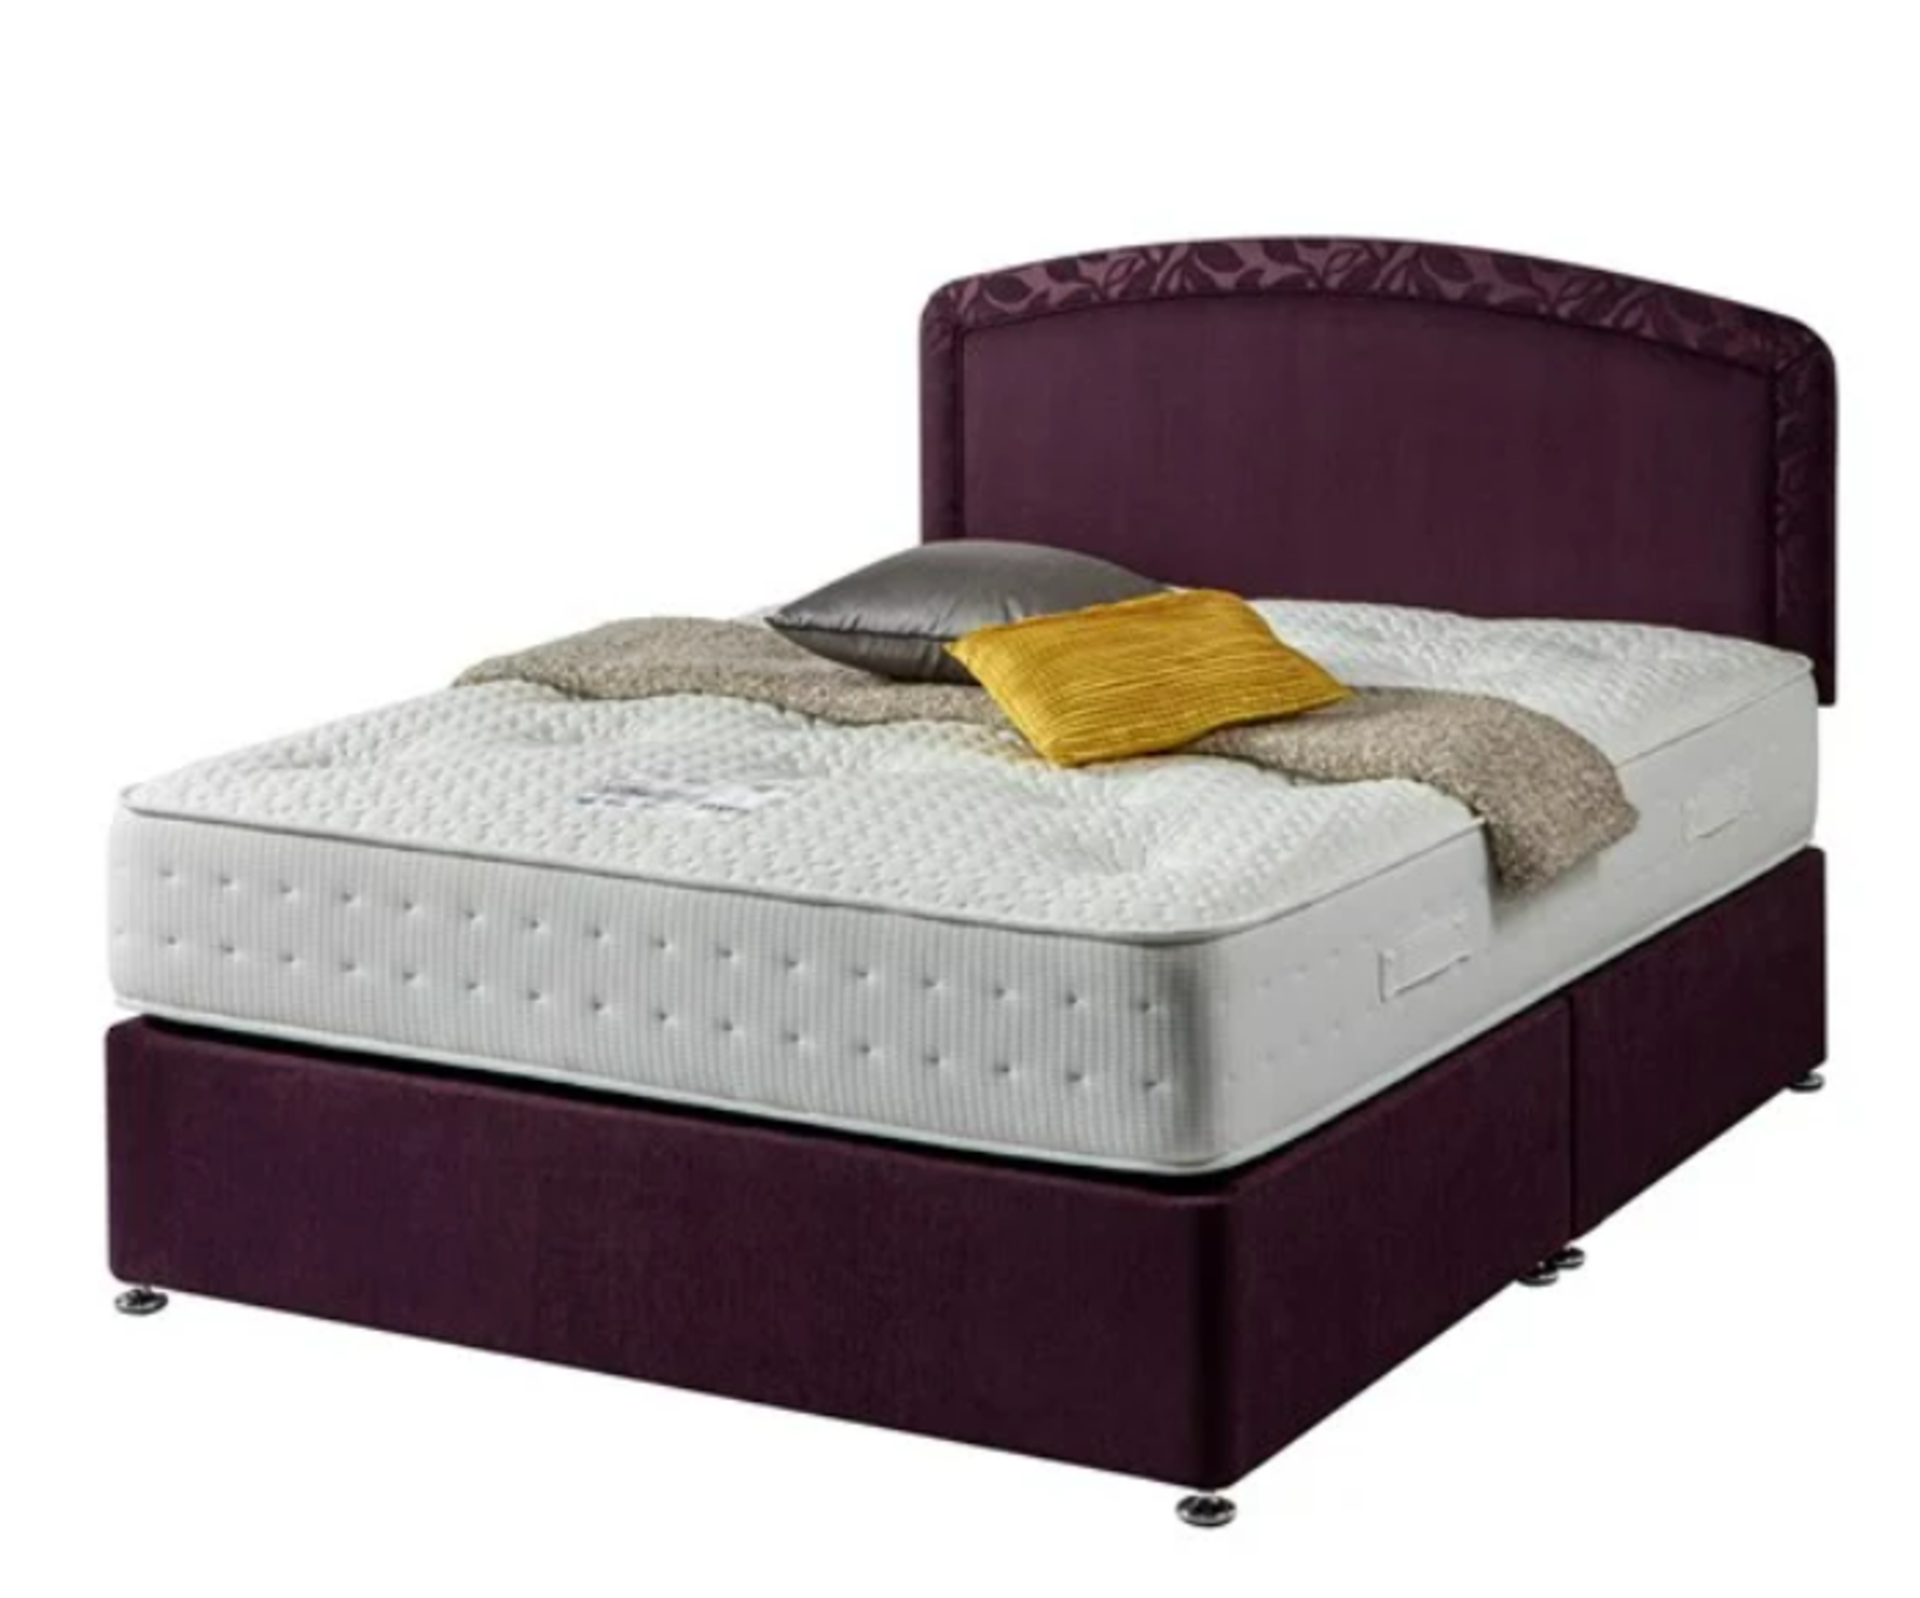 | 1X | SLEEPRIGHT LORENZA DIVAN BED BASE 4FT6 DOUBLE AUBERGINE NO MATTRESS | LOOKS TO BE IN GOOD